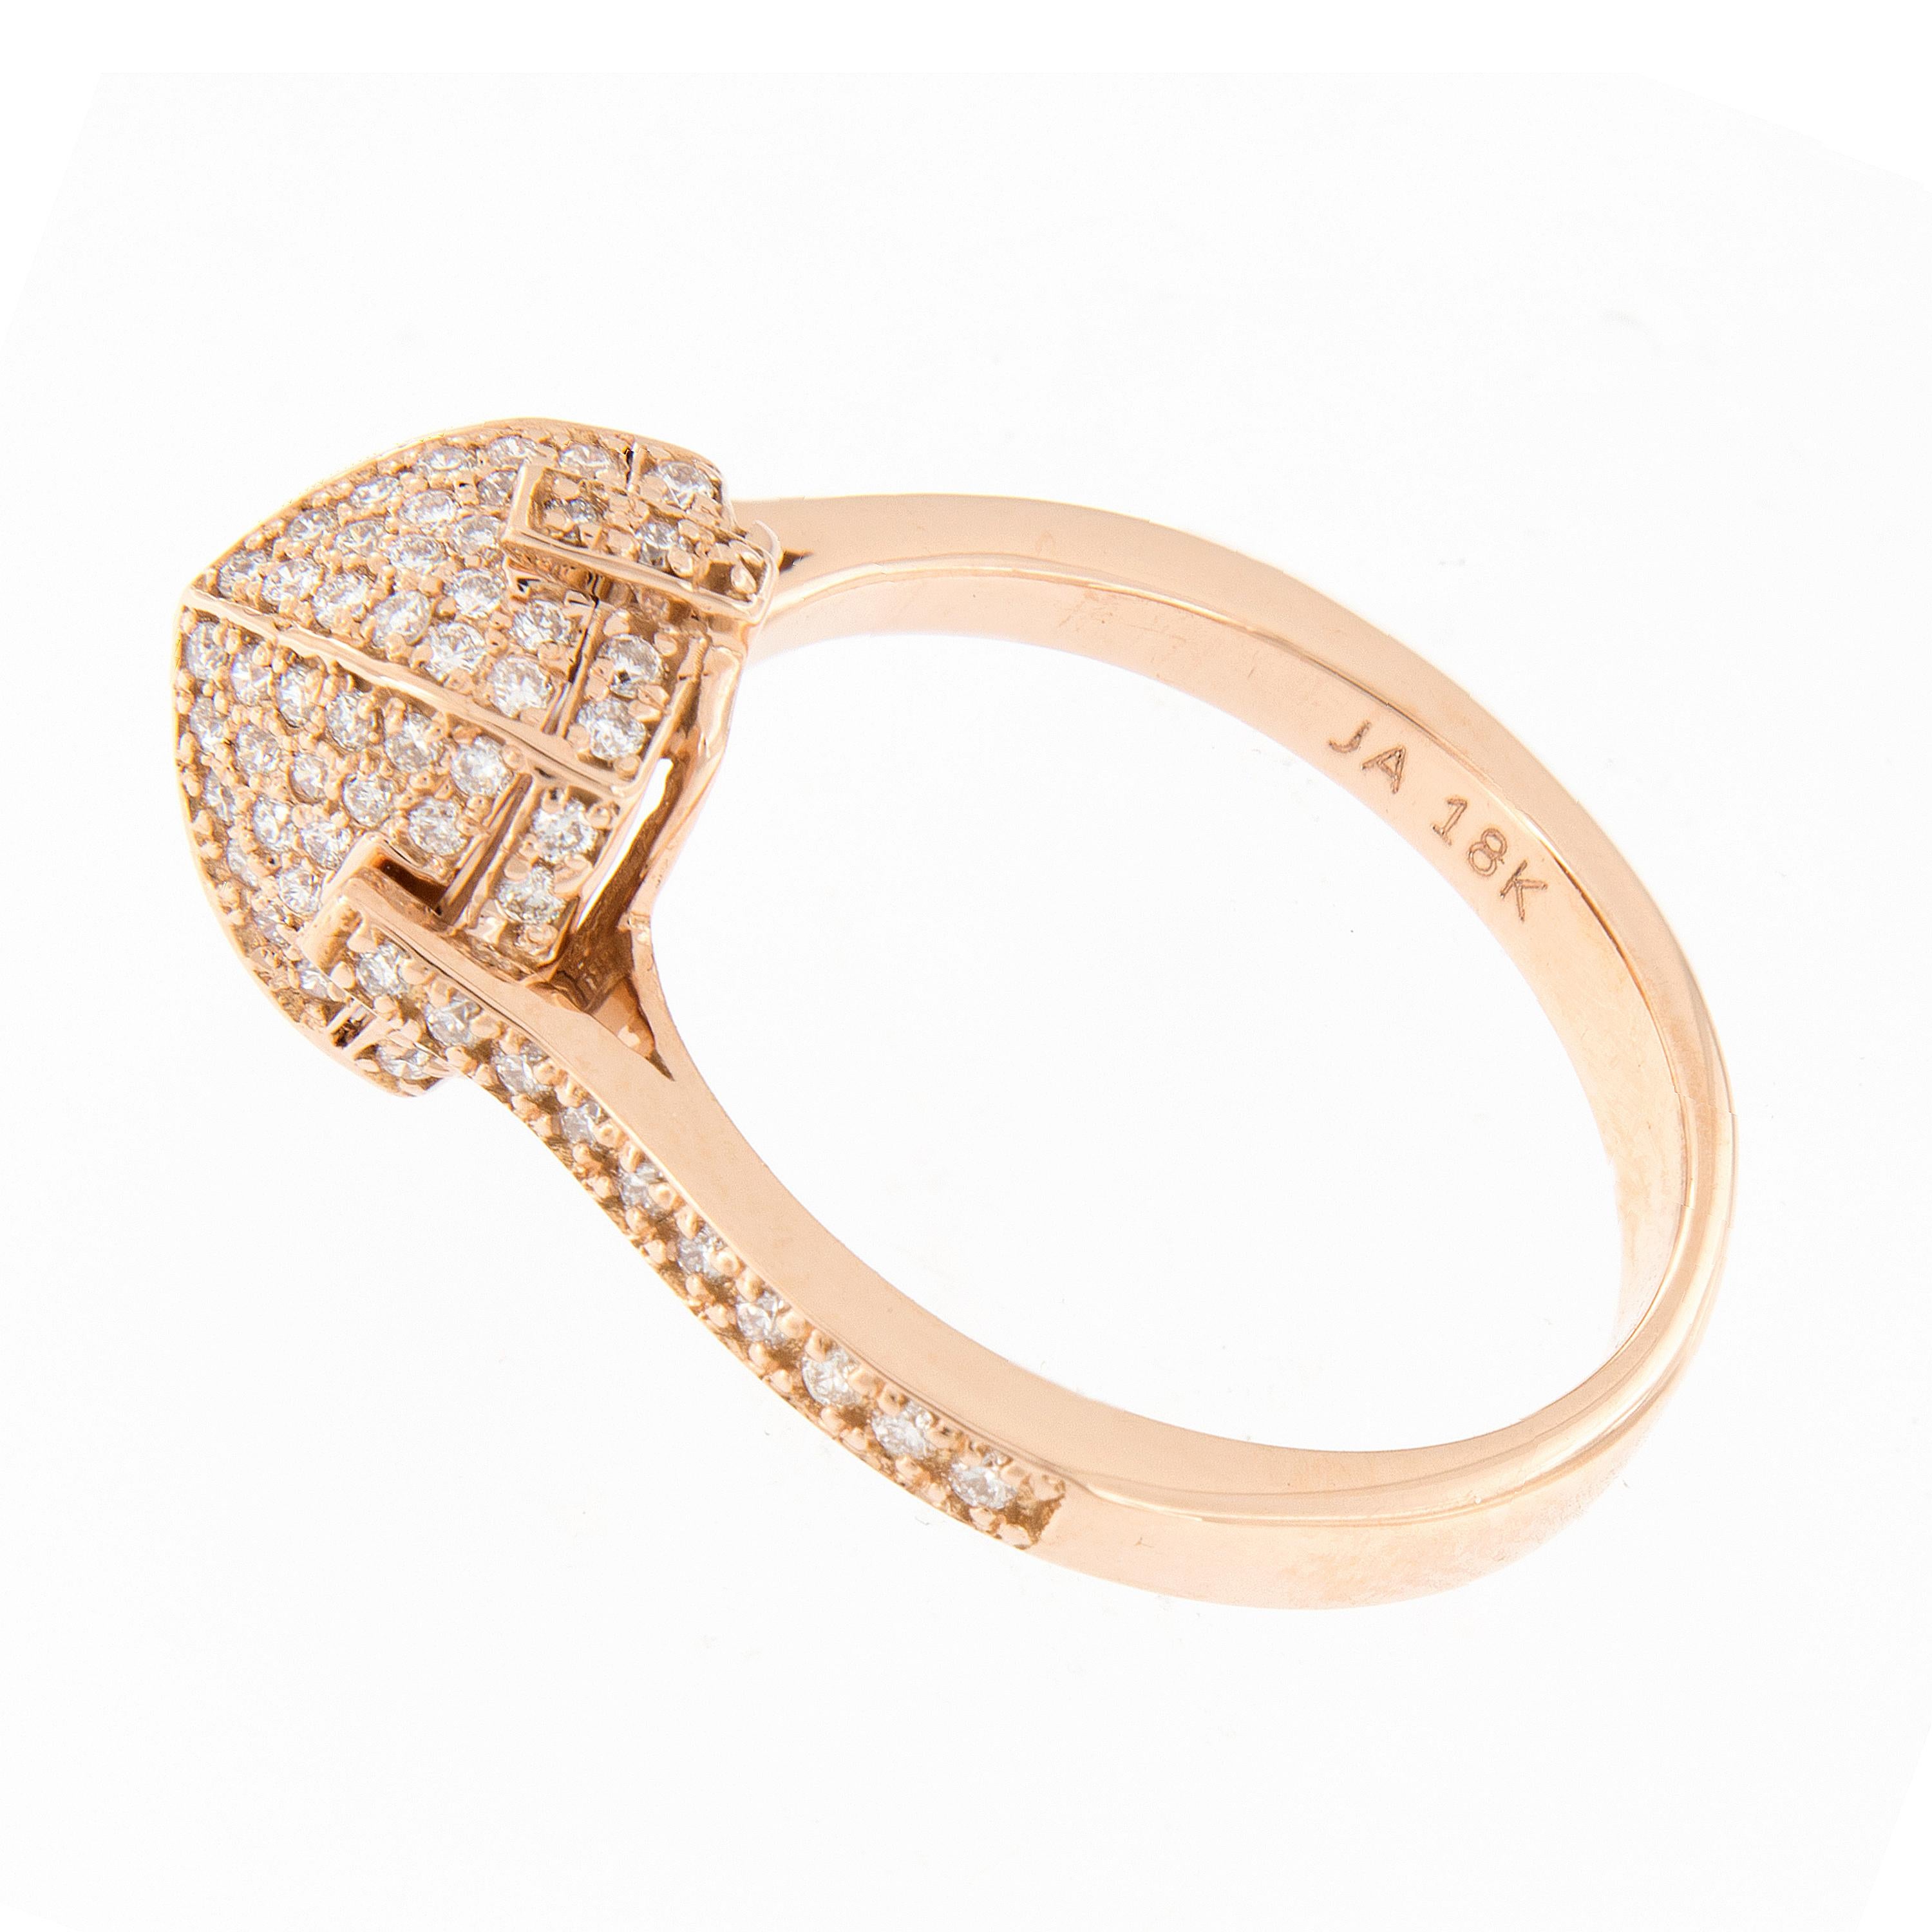 Striking 18k rose gold sugarloaf design ring pave set with diamonds. Ring designed by Goshwara from New York. Ring size 6.5. Top of ring measures 9mm x 9mm. Marked Goshwara

Diamond 0.56 cttw F-G VS 